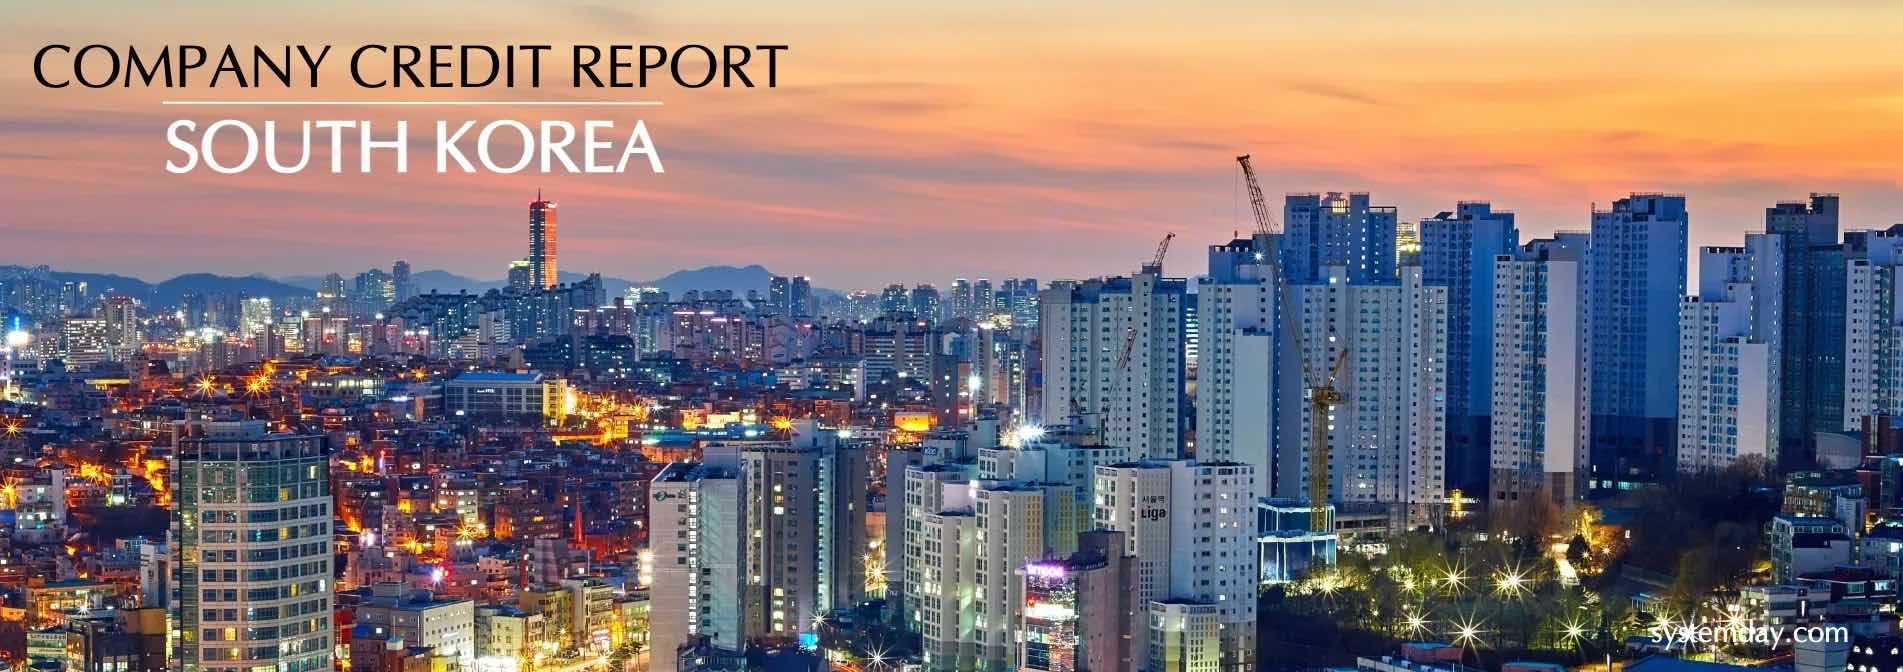 South Korea Company Credit Report